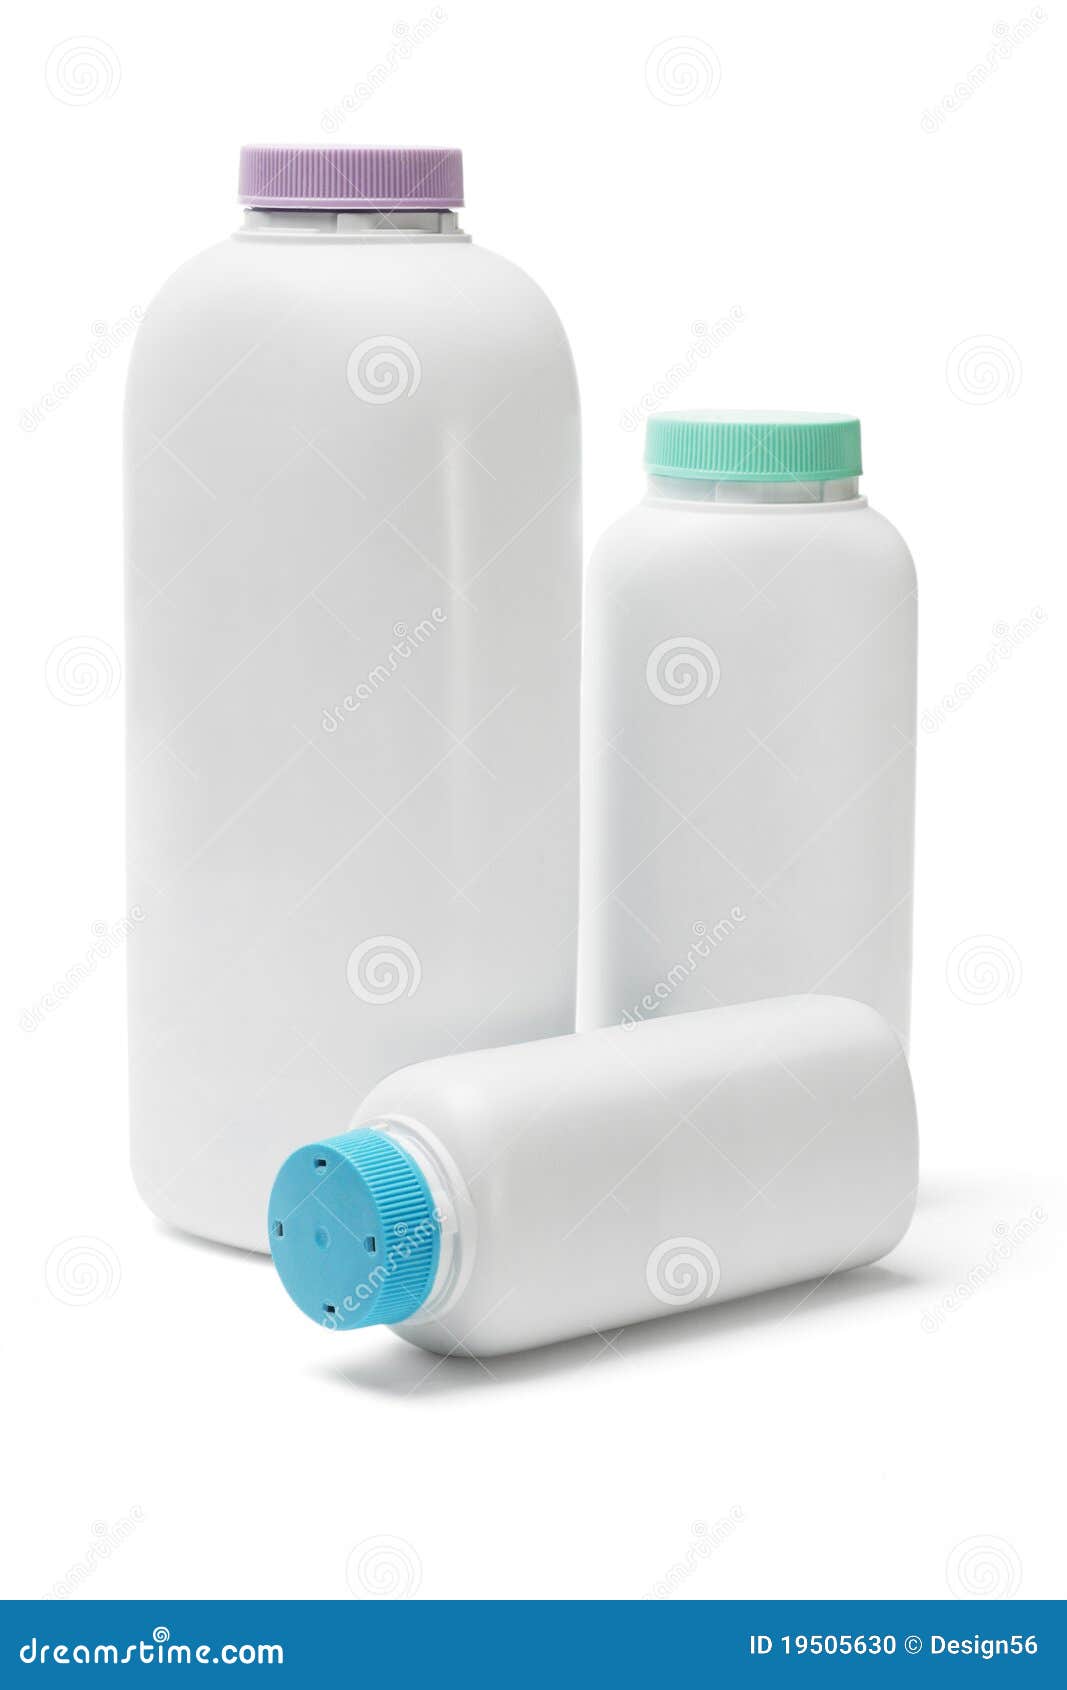 plastic bottles of talcum powder